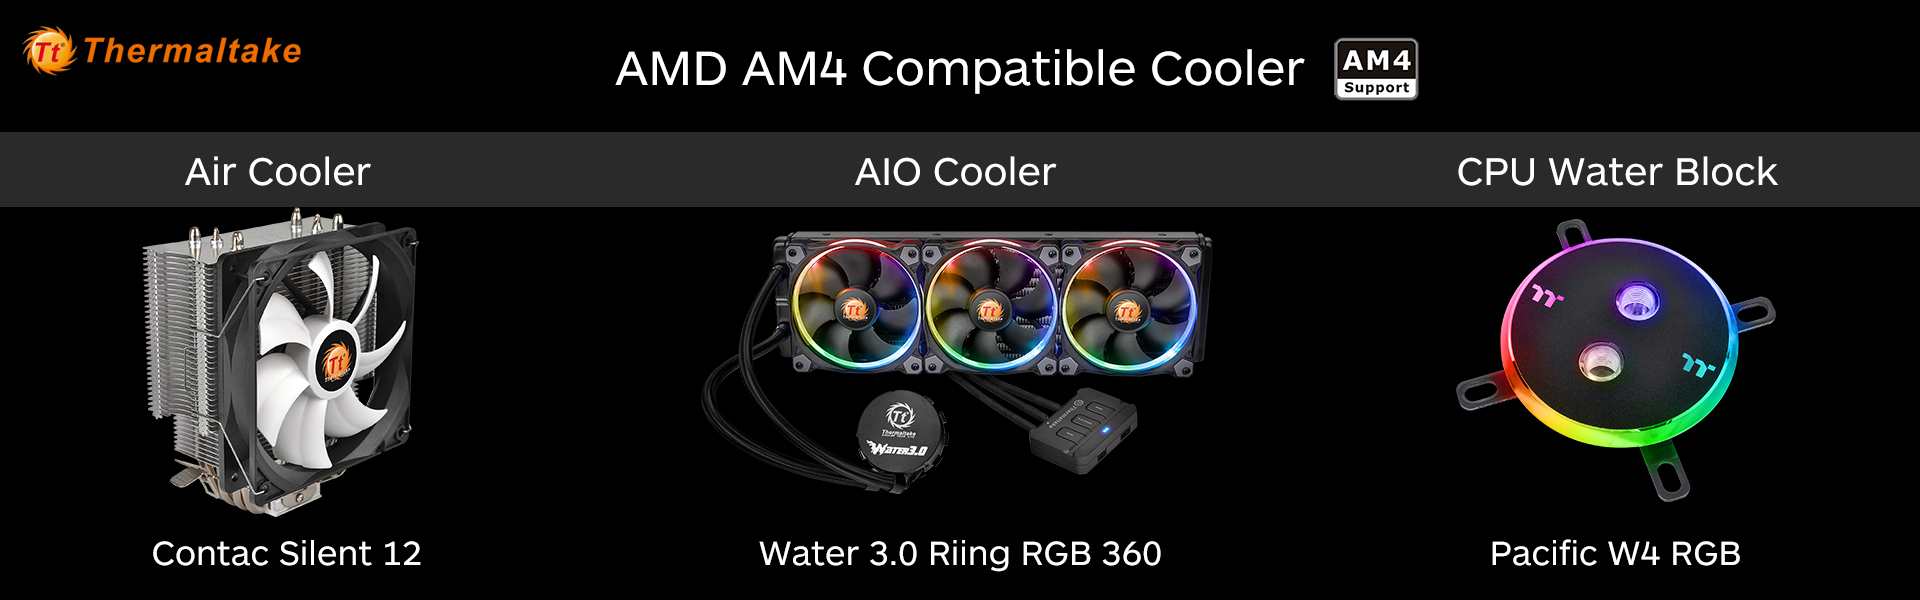 Thermaltake เปิดตัวชุดระบายความร้อนทั้งชุดน้ำสำเร็จและชุดพัดลมรุ่นใหม่ล่าสุดรองรับซ๊อกเก็ต AM4 ซีพียู AMD’s Ryzen ใหม่ล่าสุดที่จะเปิดตัวเร็วๆนี้ 